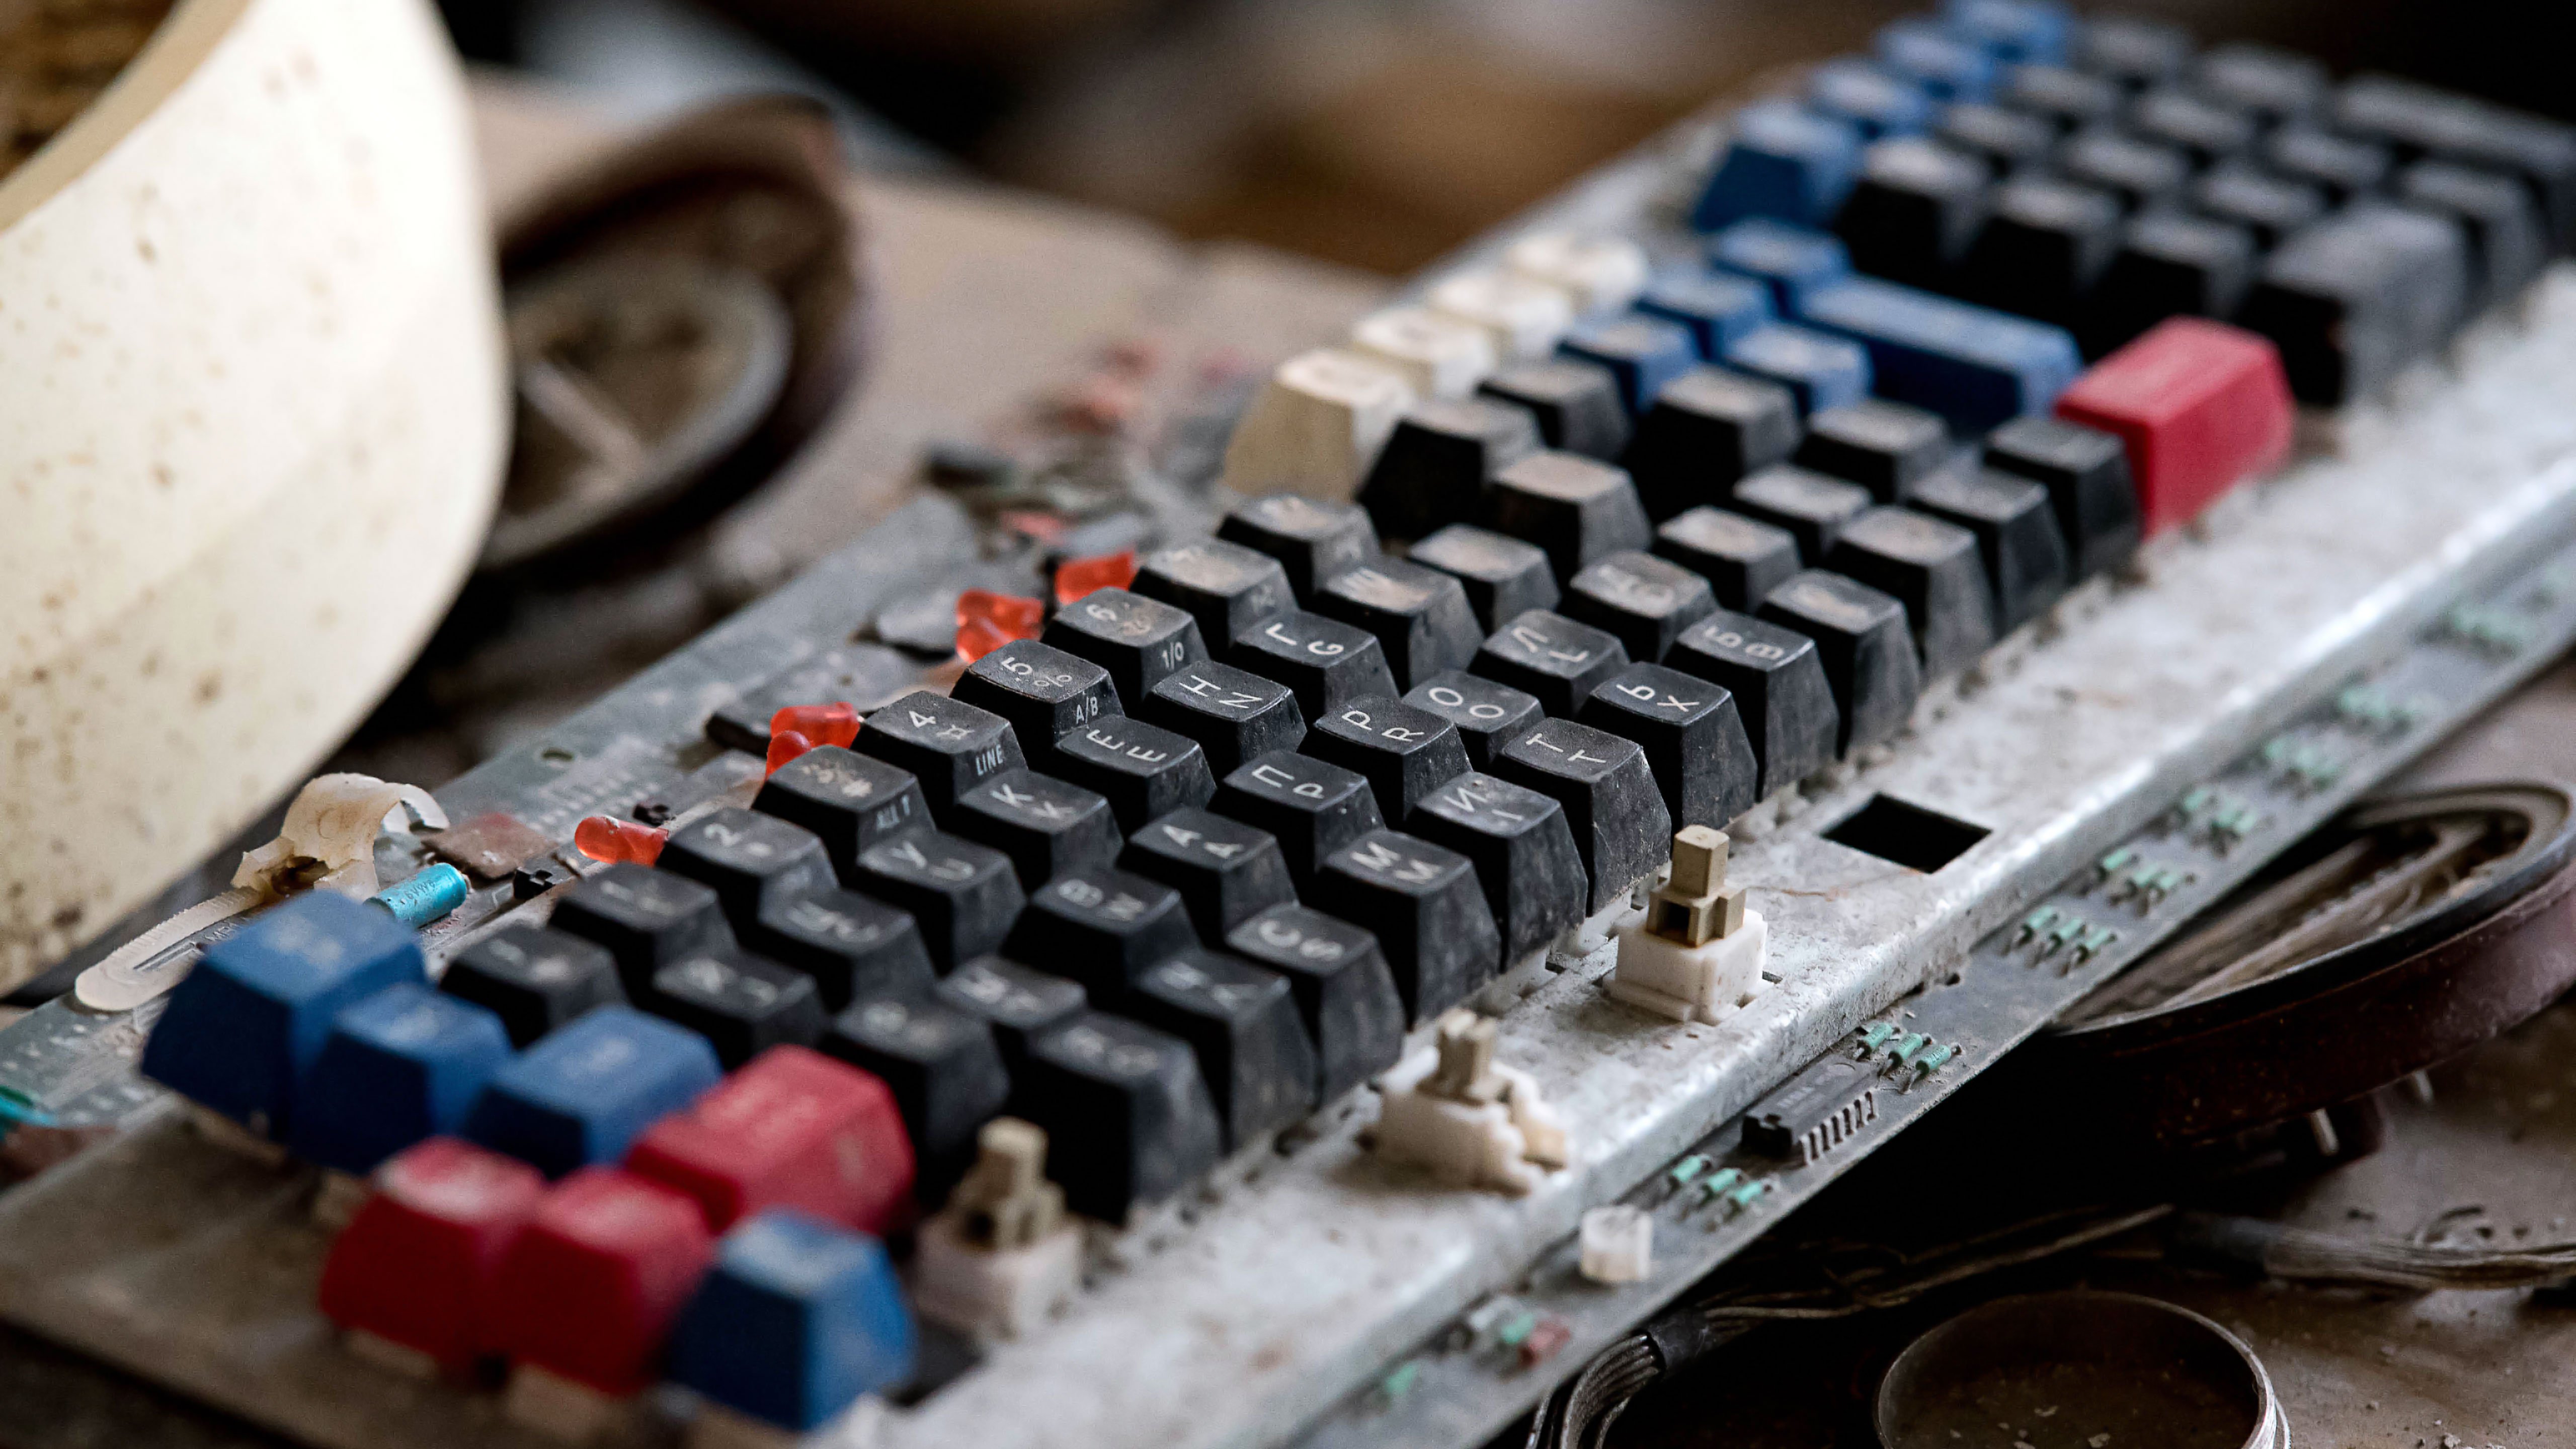 Mechanical Keyboard From Chernobyl 4K wallpaper